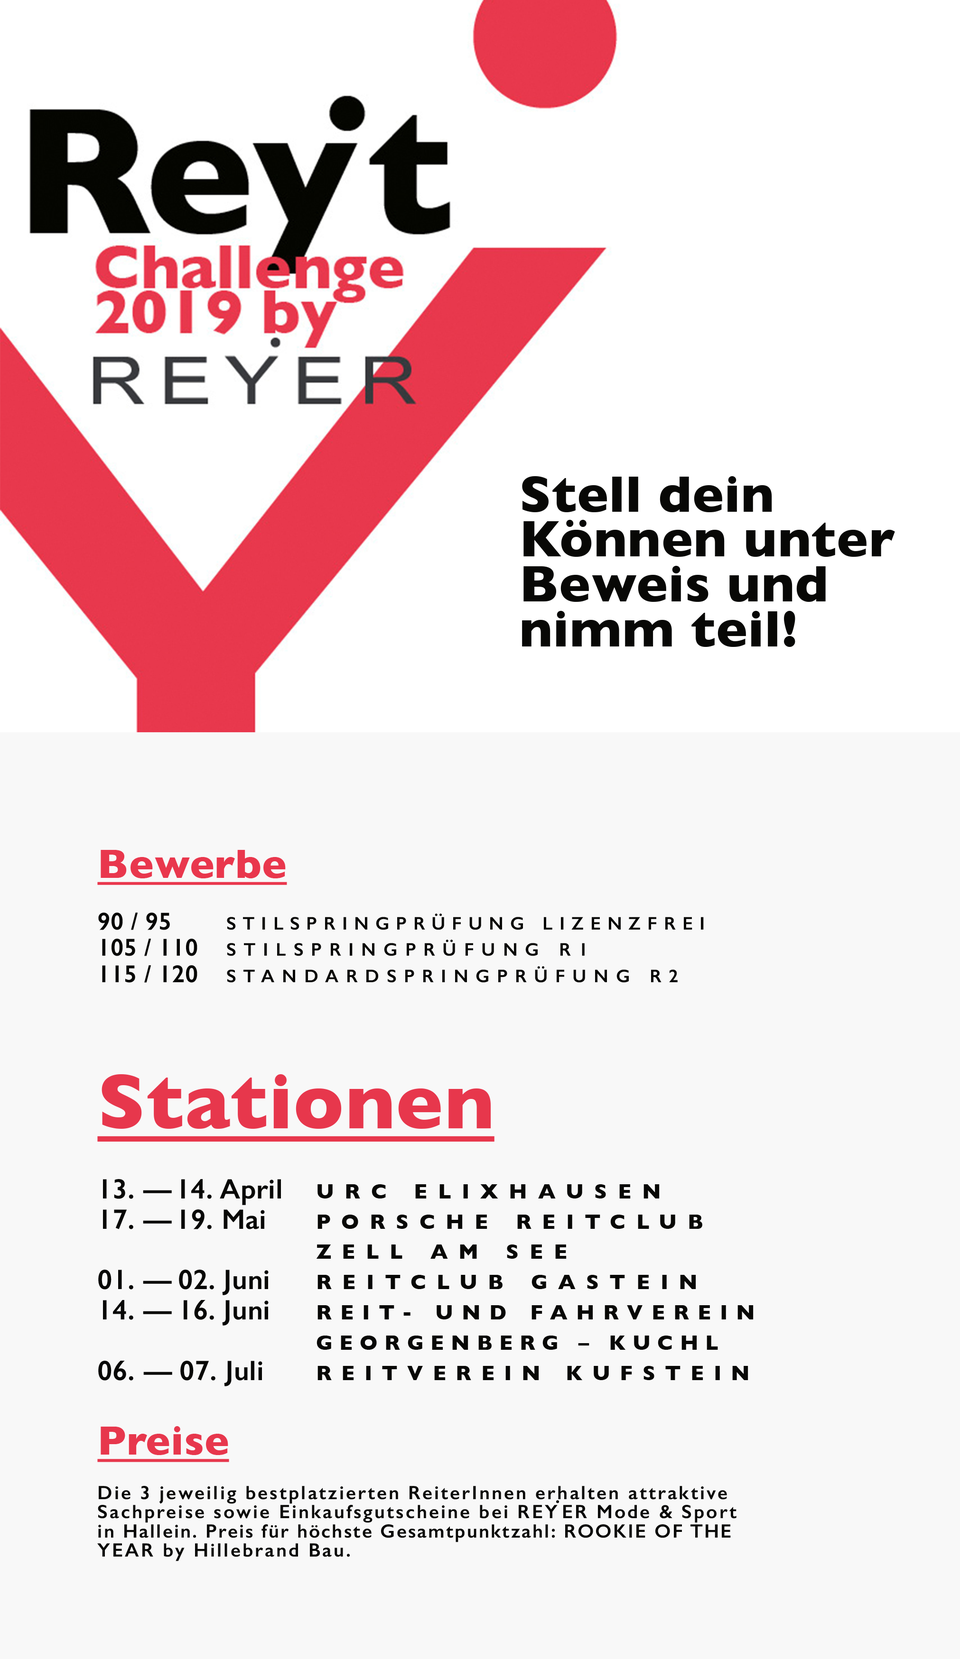 Reyer Challenge